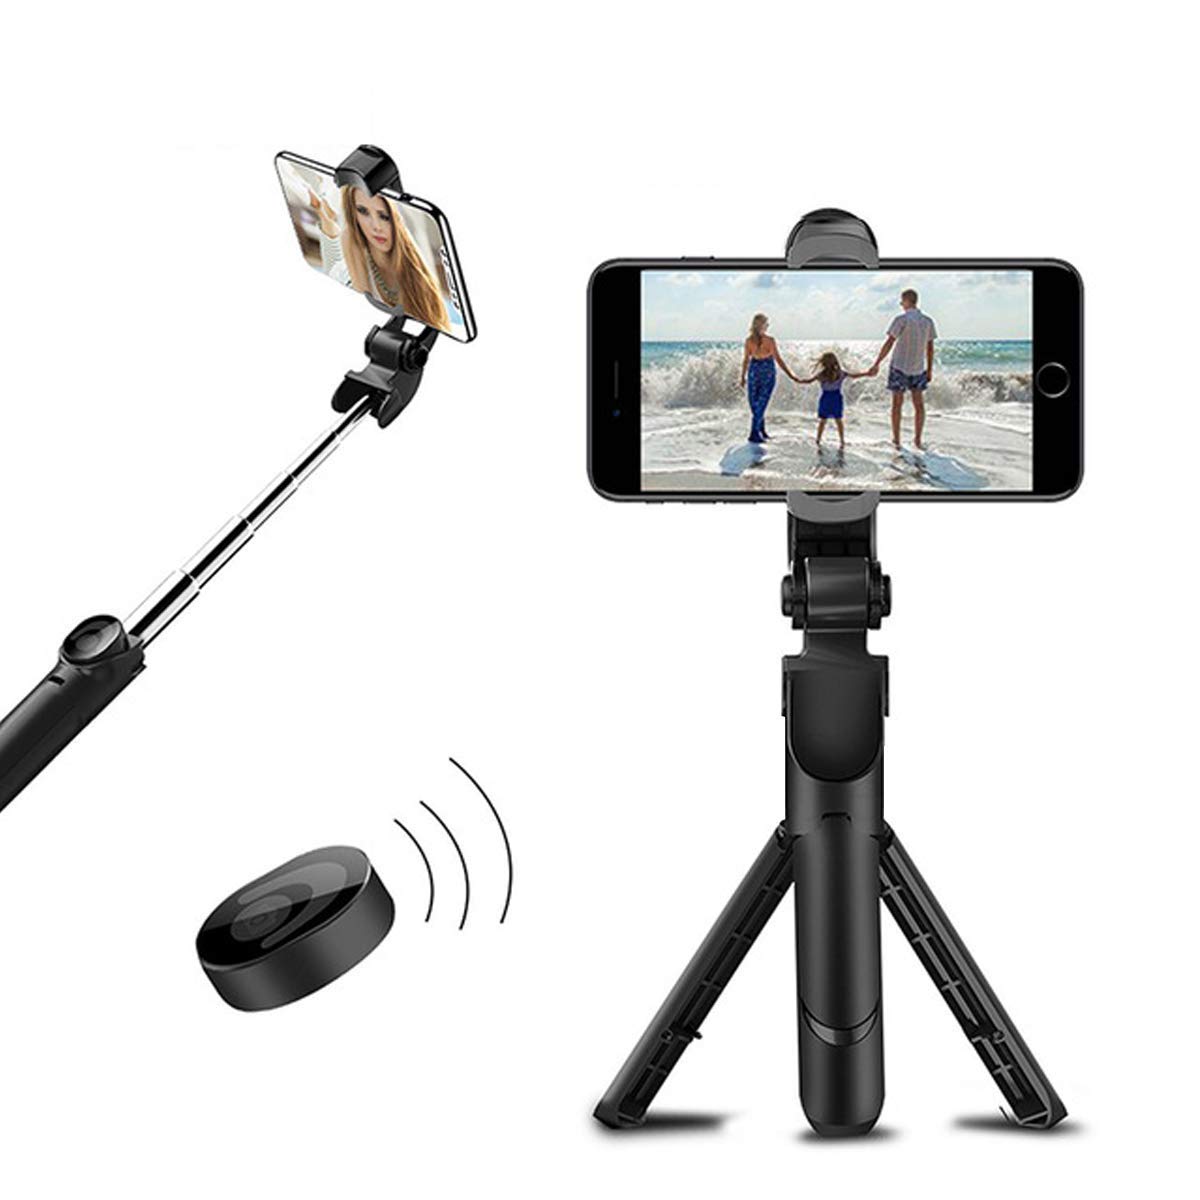 VivoTech™ 3-in-1 Bluetooth Selfie Stick Tripod with Remote